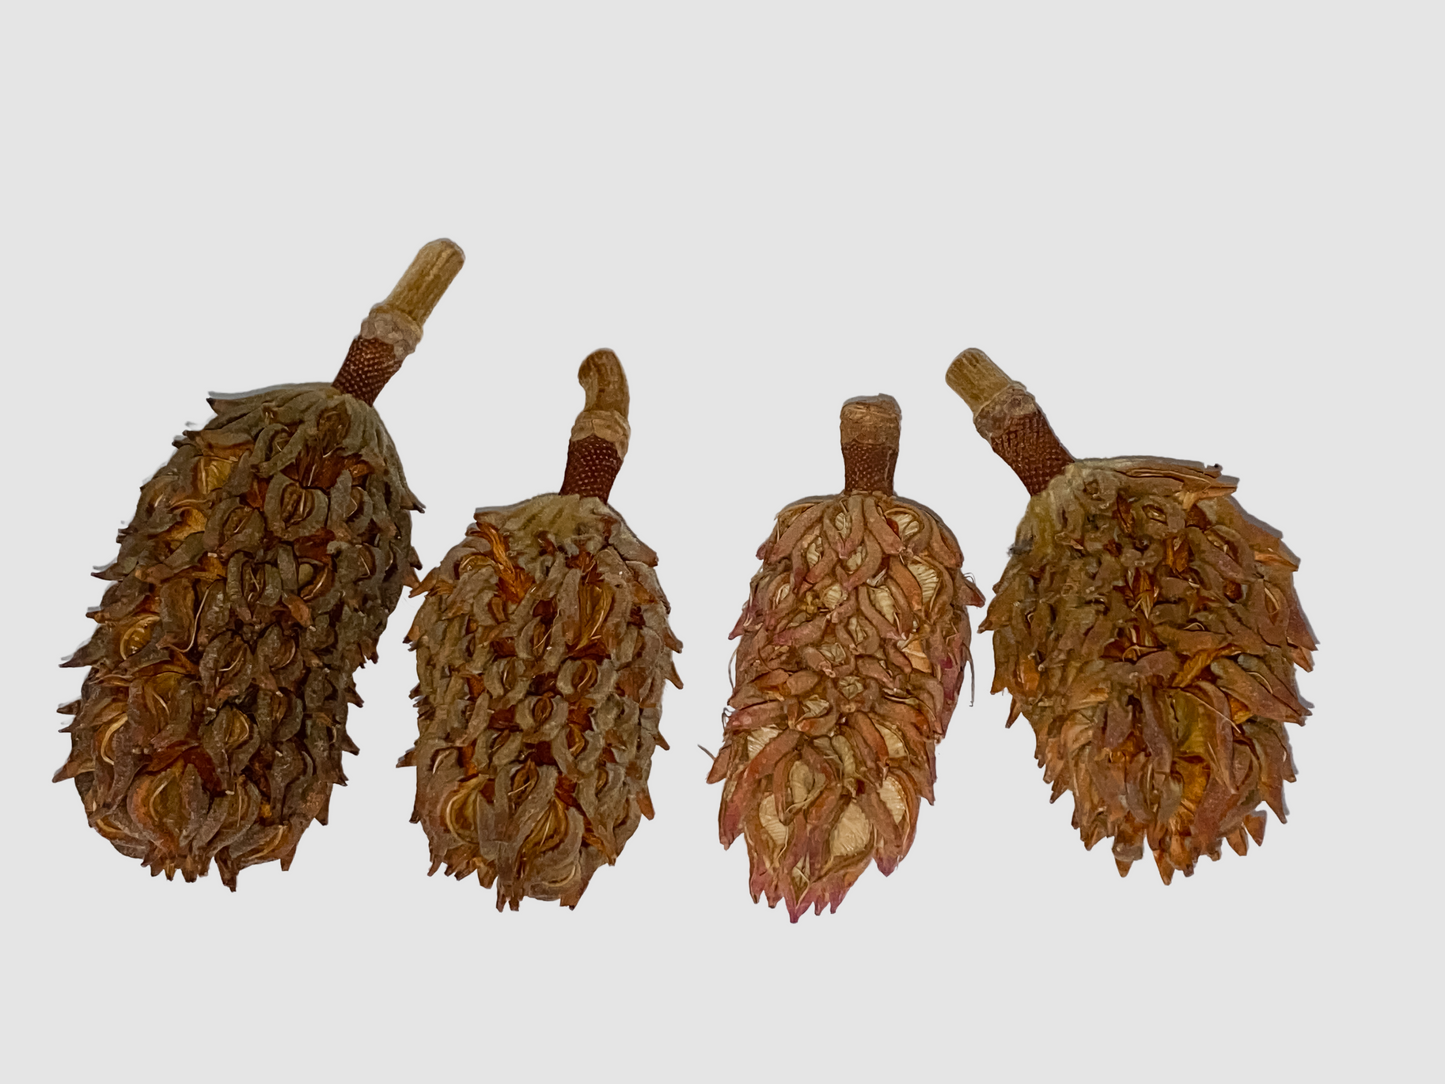 Magnolia Seed Pods / Bio-Active Supplies for Reptile and Invertebrate Enclosures